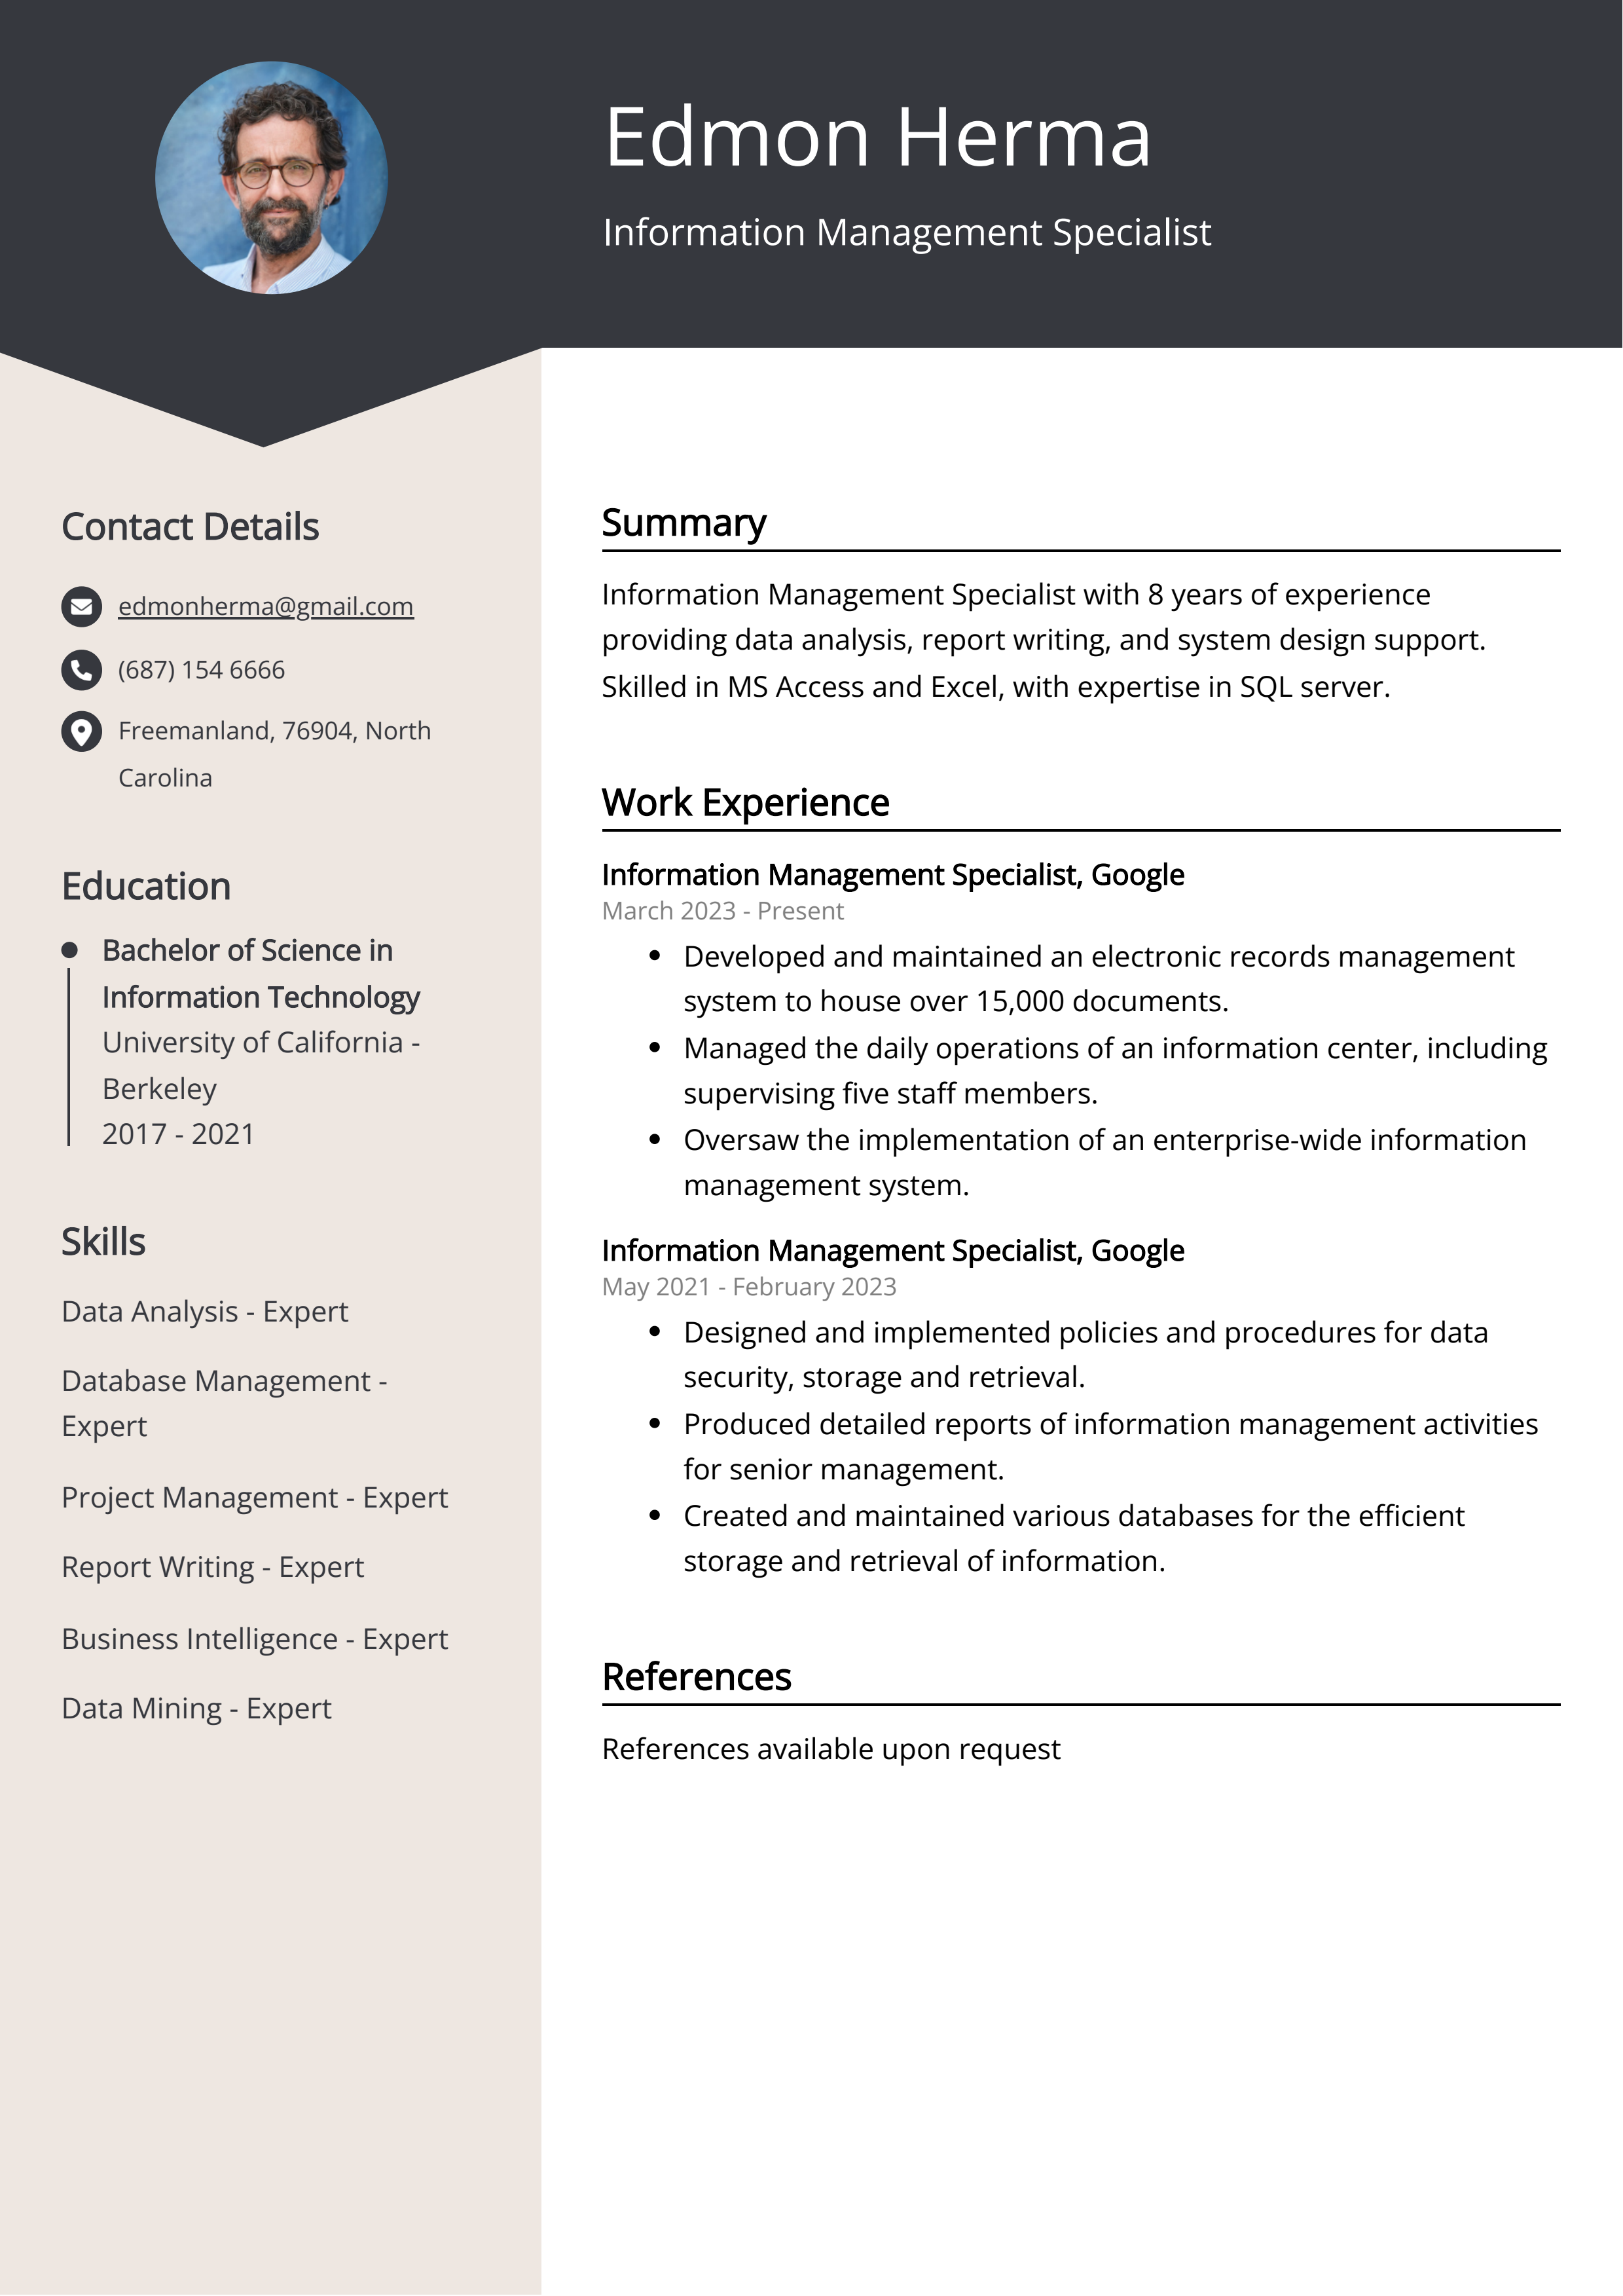 Information Management Specialist CV Example